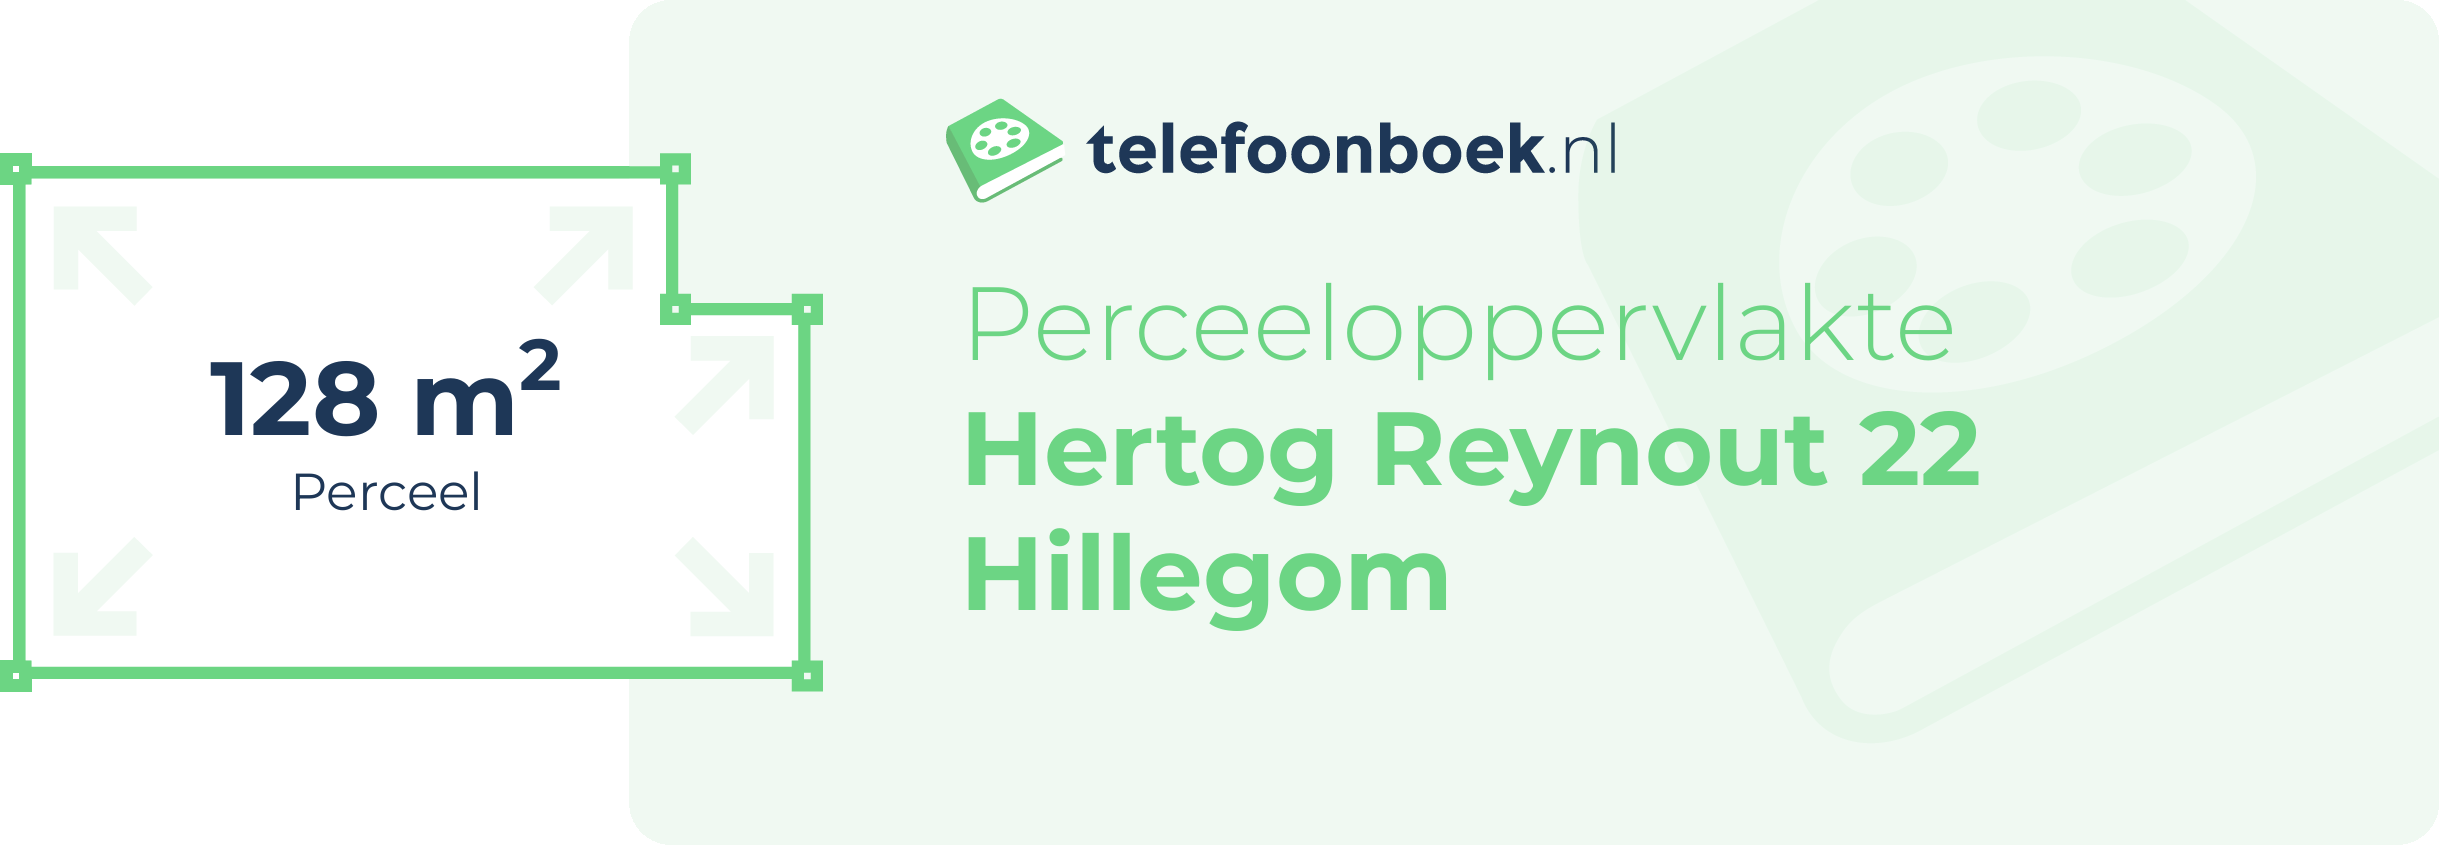 Perceeloppervlakte Hertog Reynout 22 Hillegom